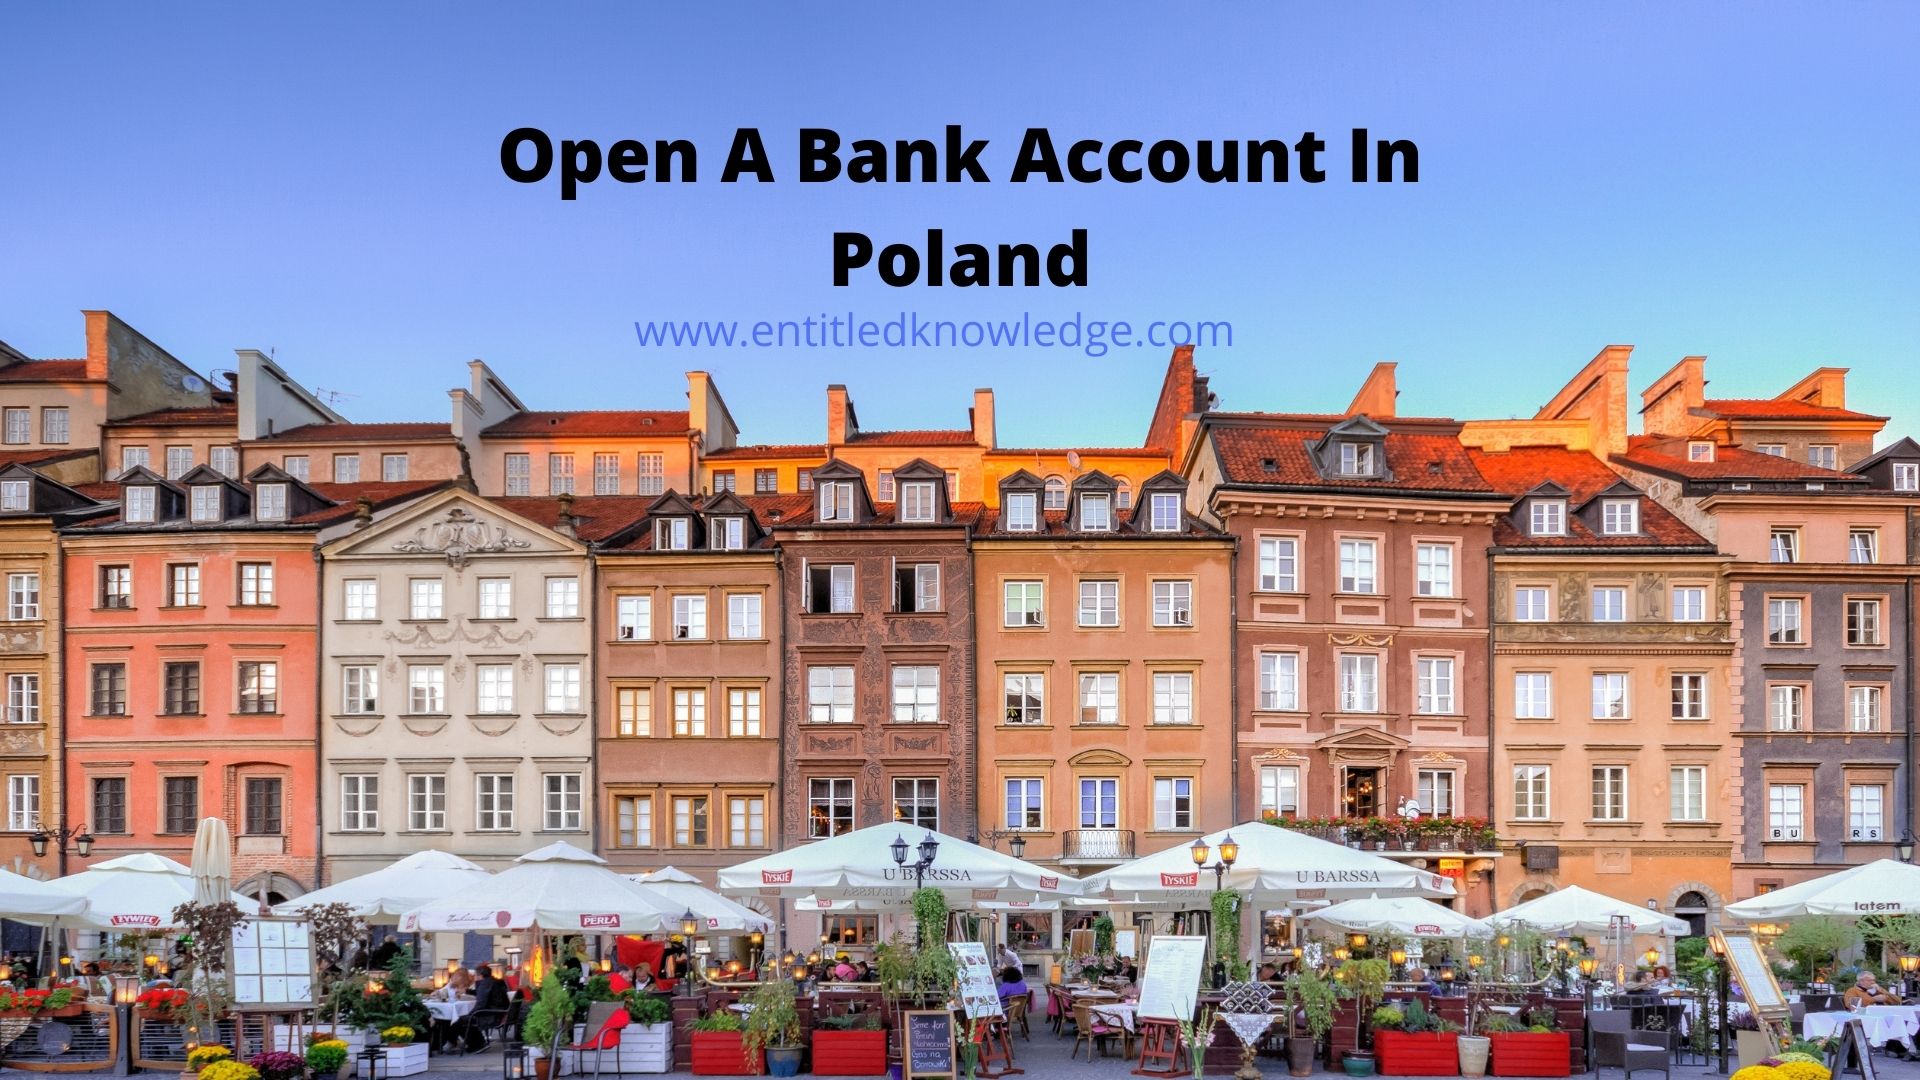 Open A Bank Account In Poland